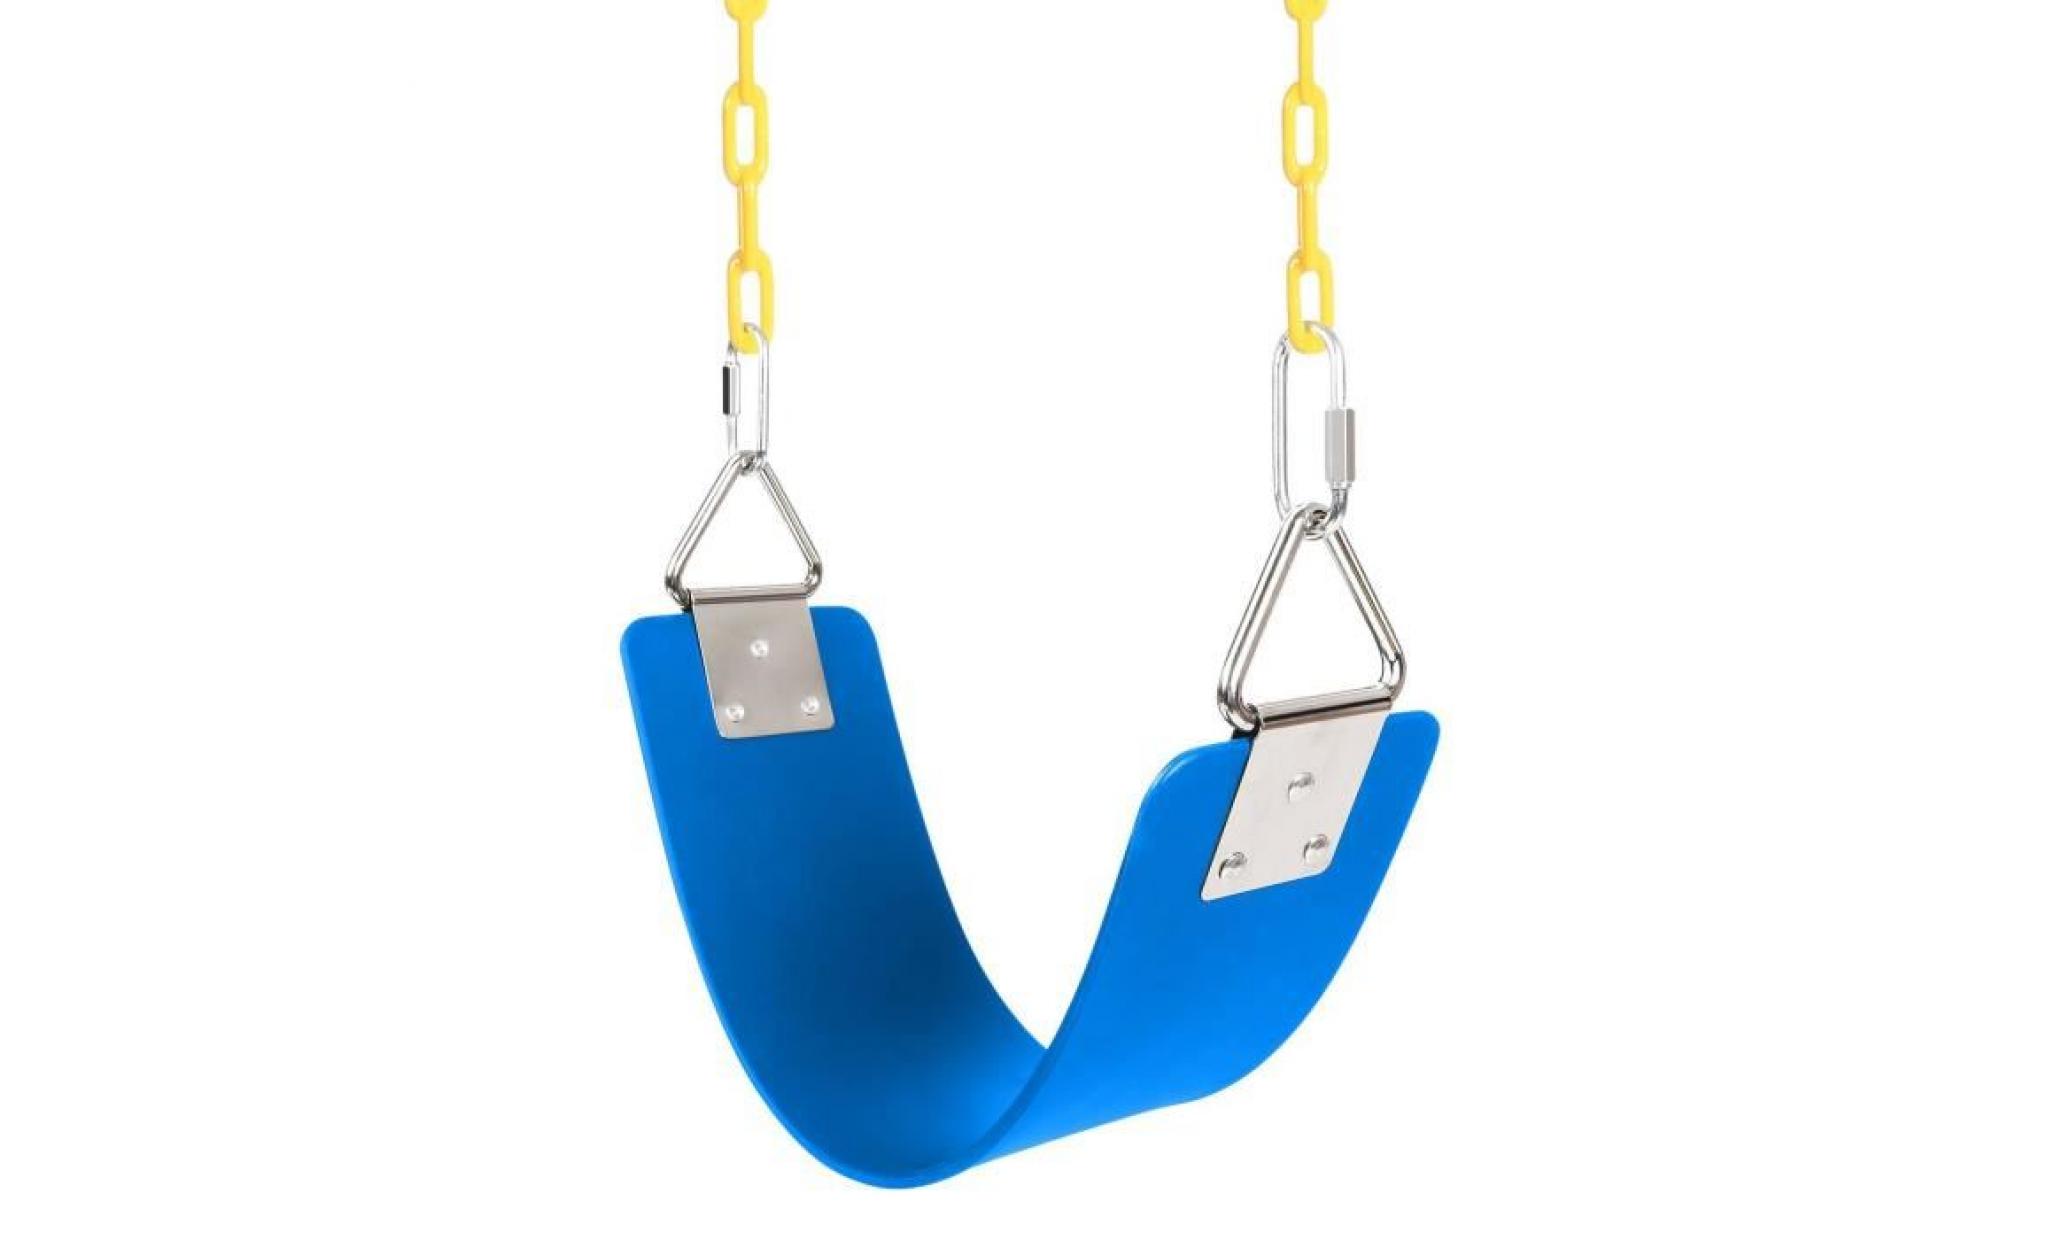 swing set siège de balançoire avec chaîne de fer ensemble   bleu